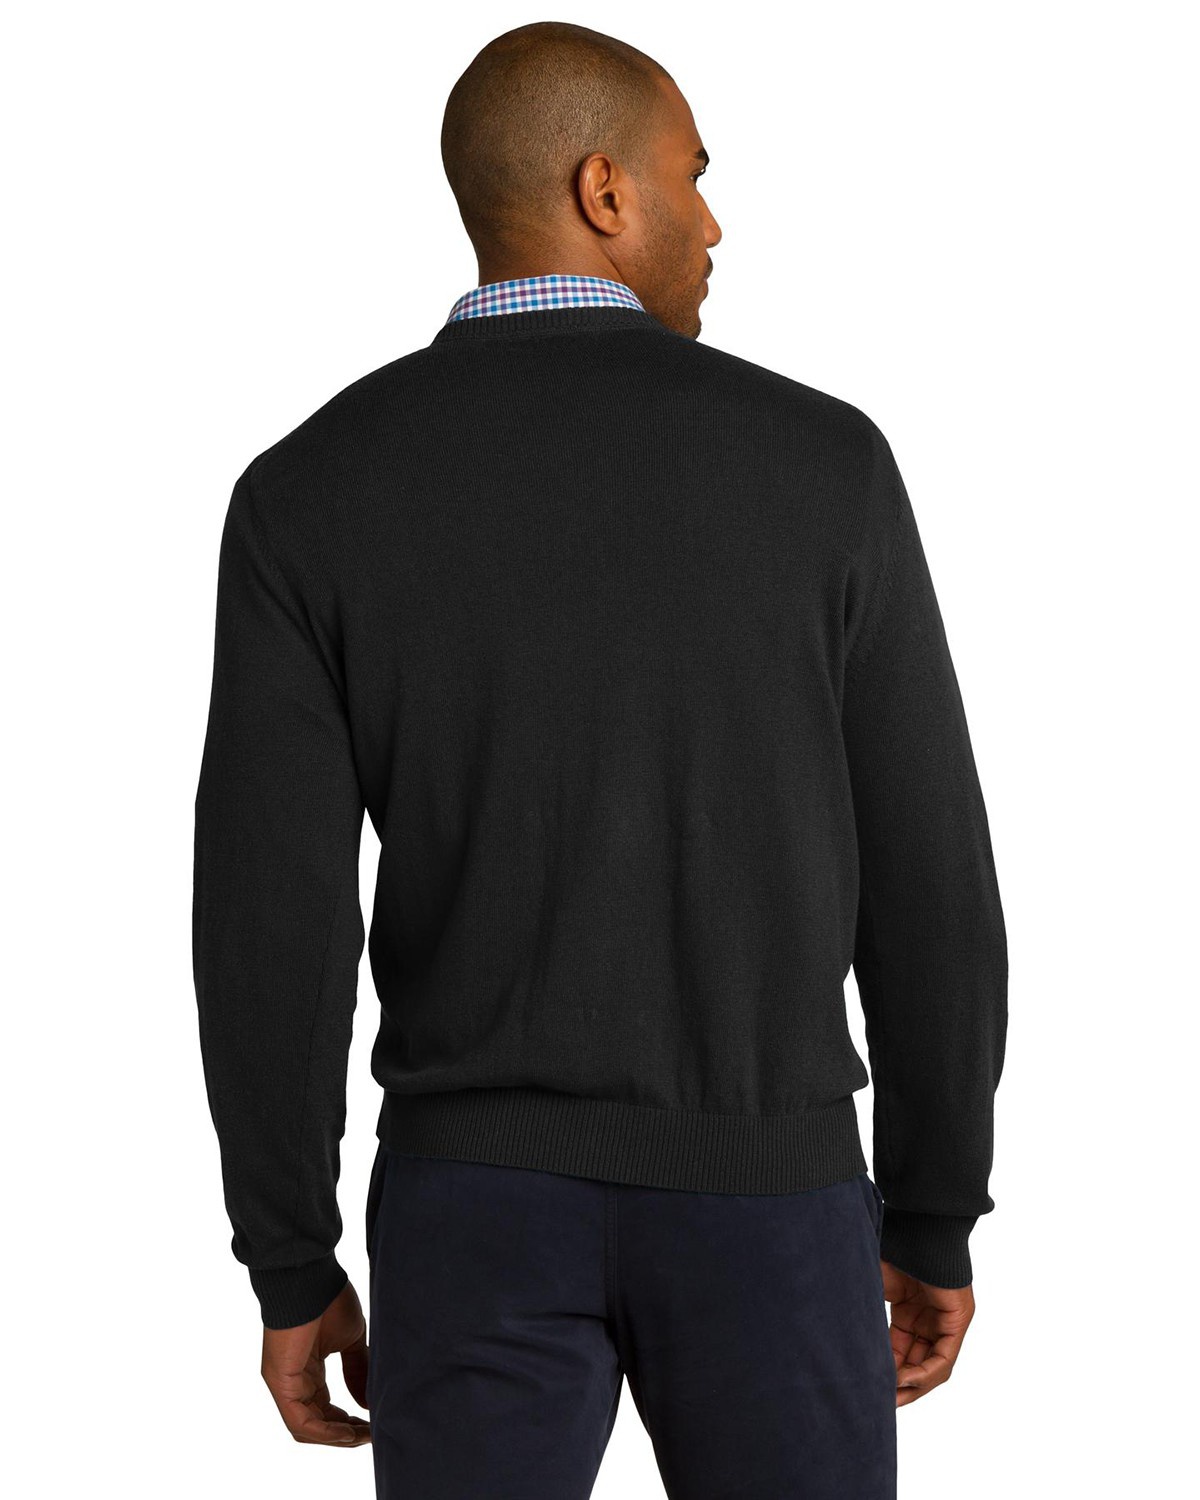 'Port Authority SW285 V-Neck Sweater'